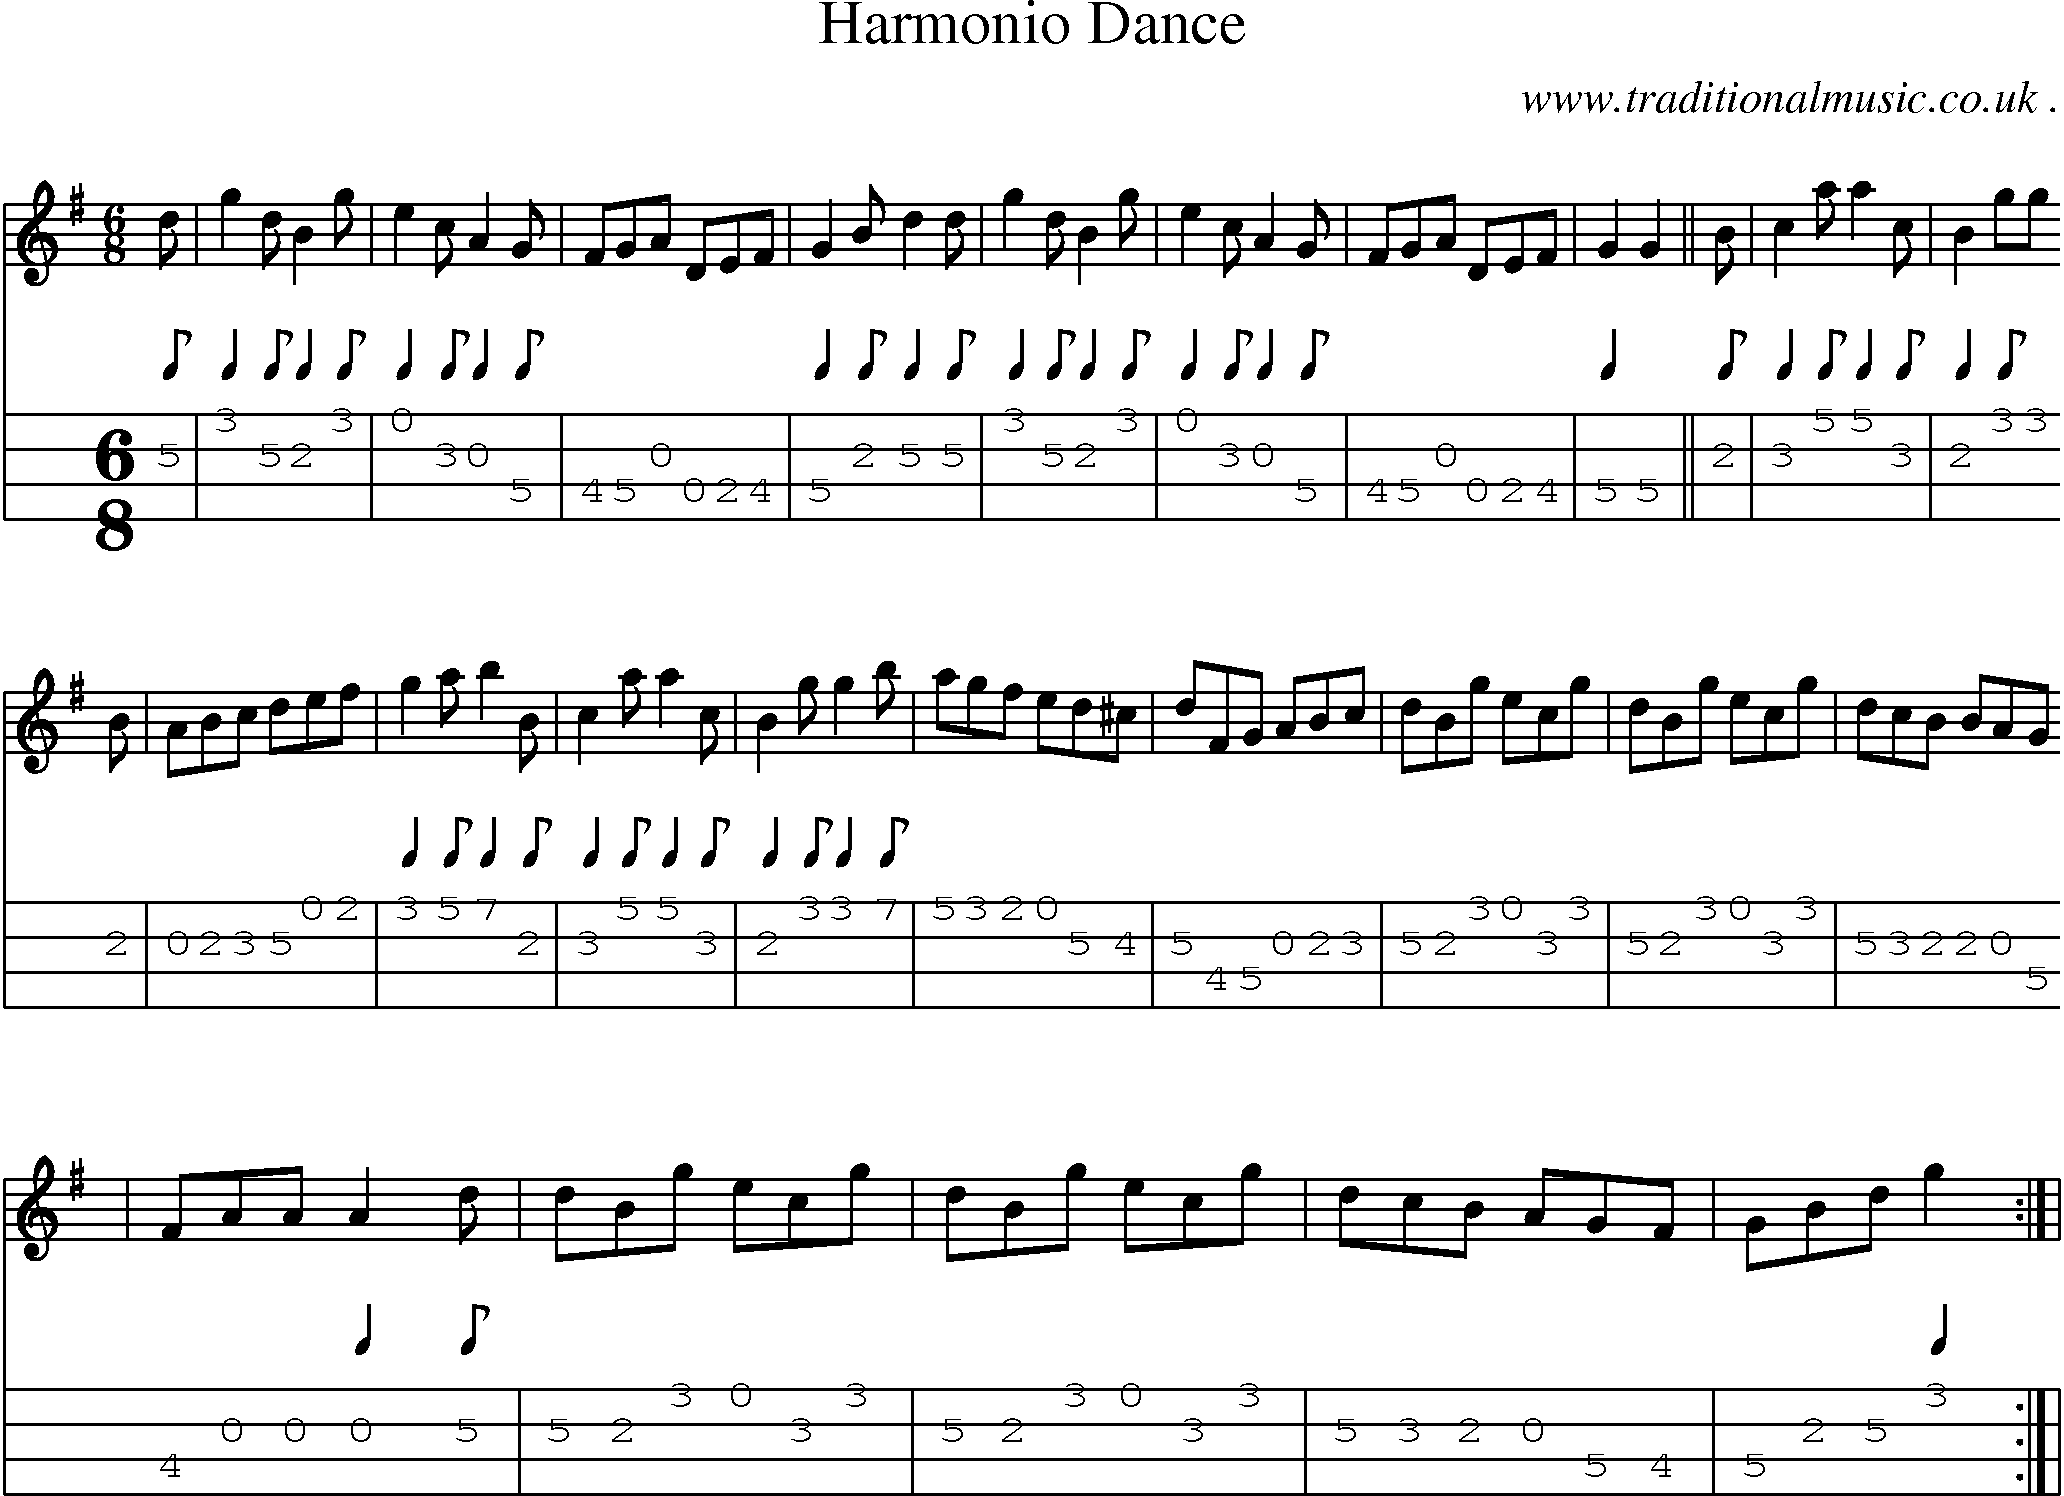 Sheet-Music and Mandolin Tabs for Harmonio Dance